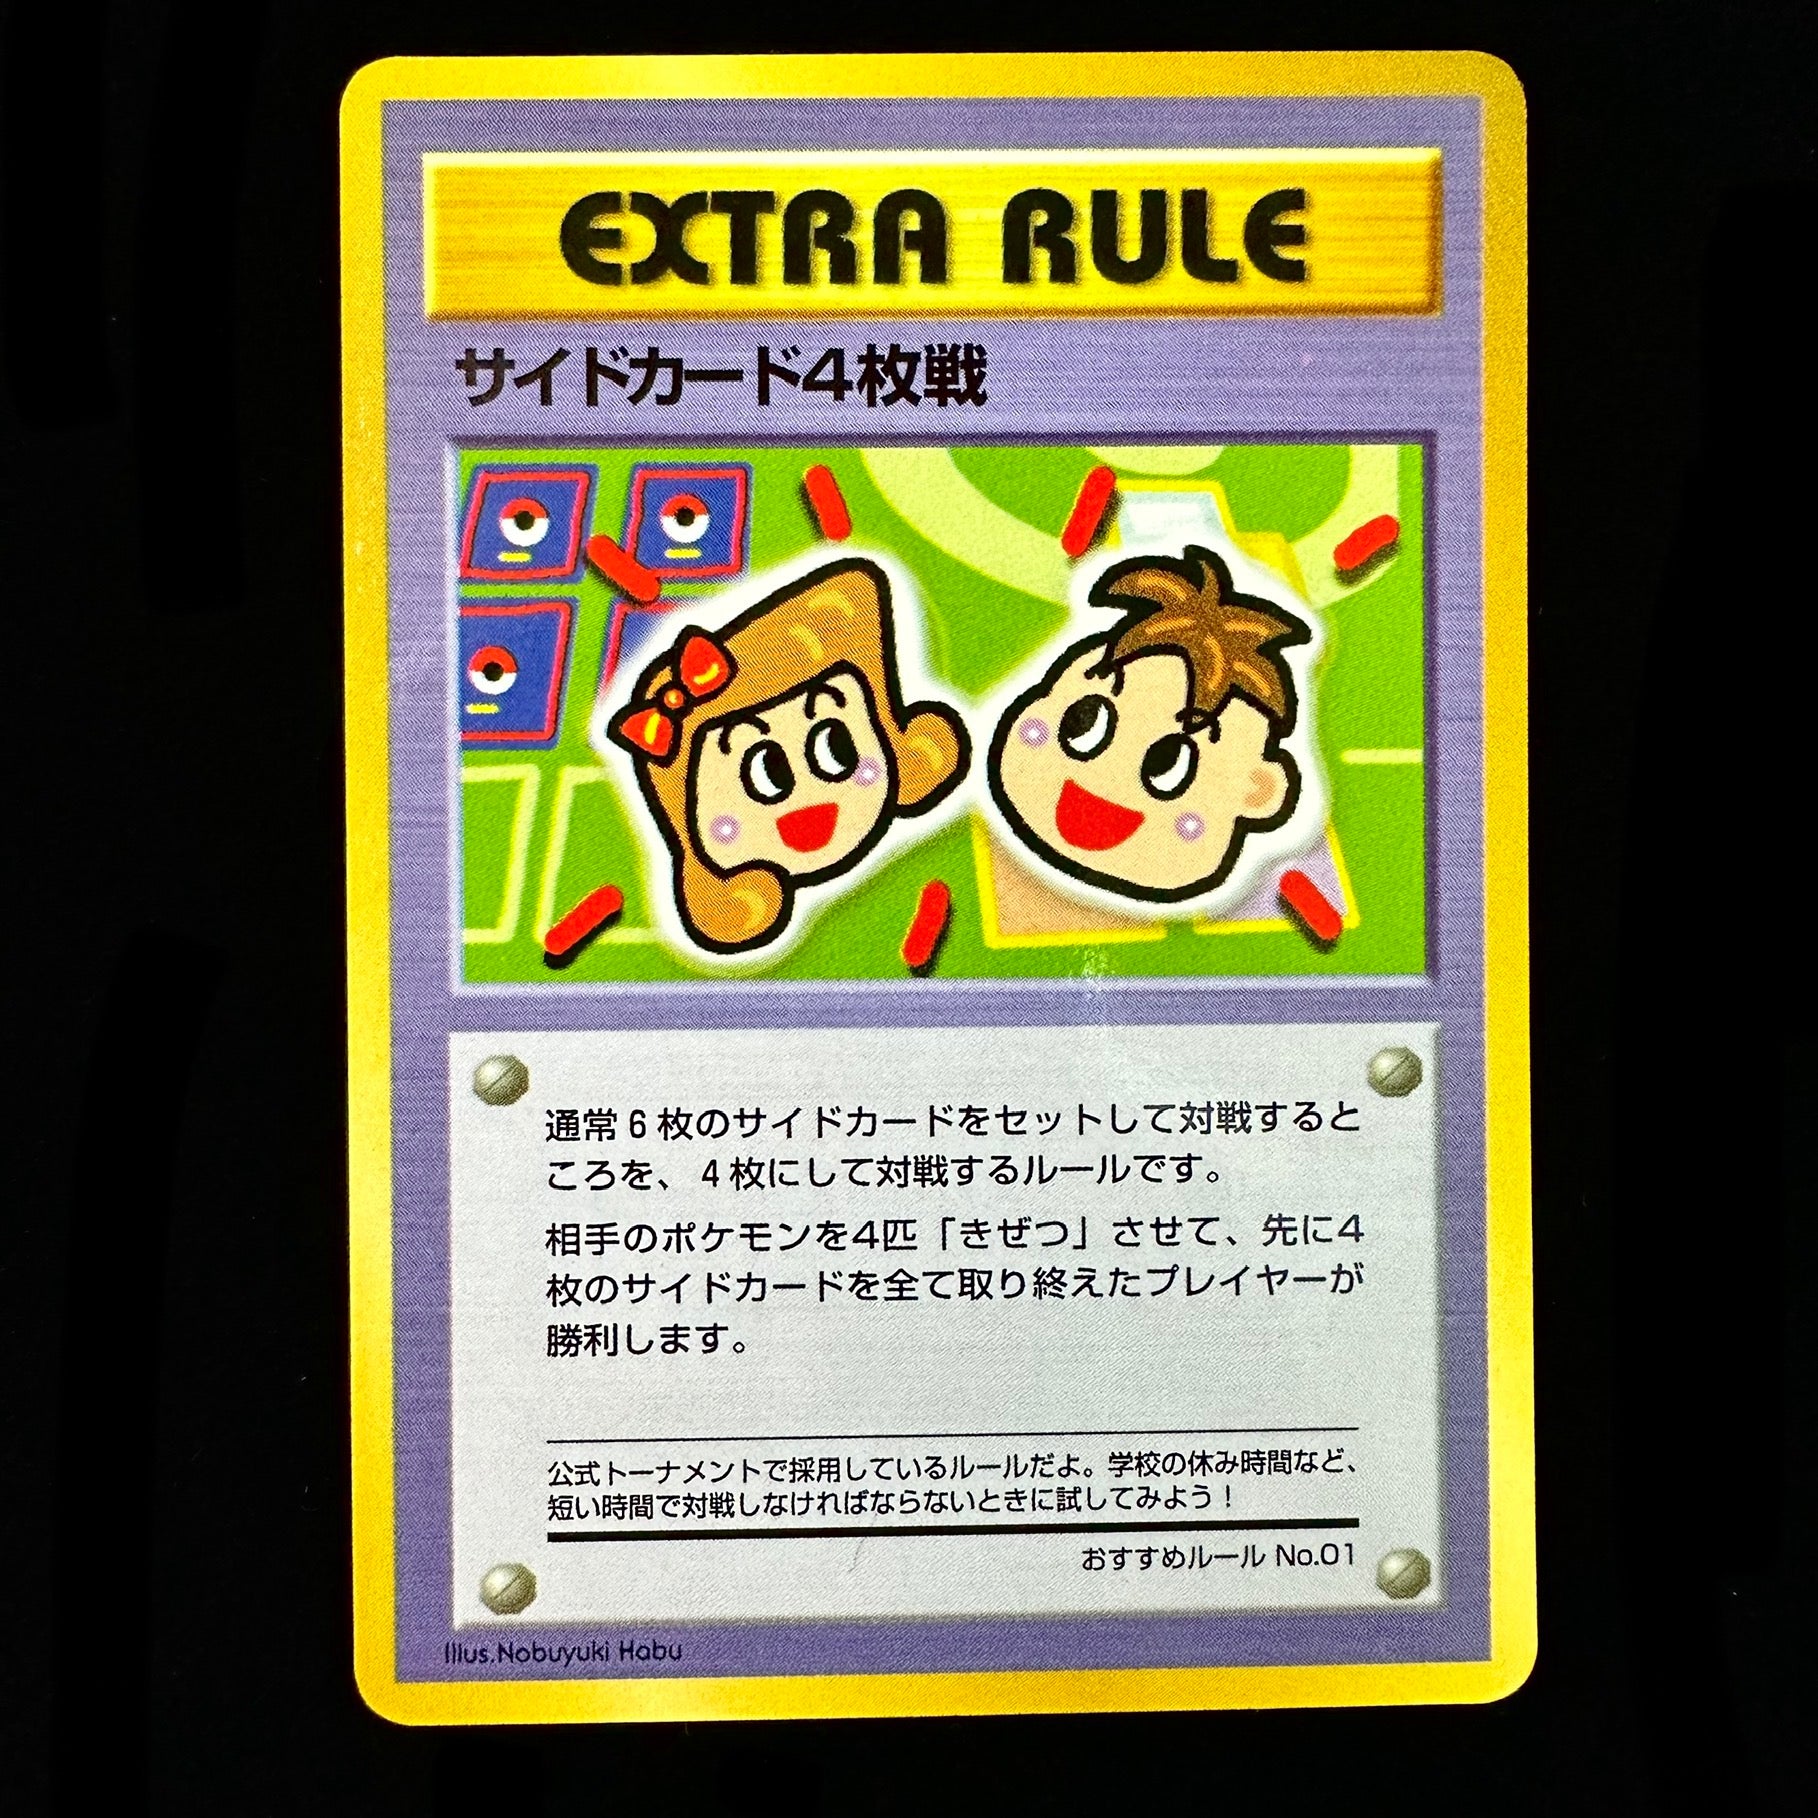 Pokémon Card Game "EXTRA RULE" No.01